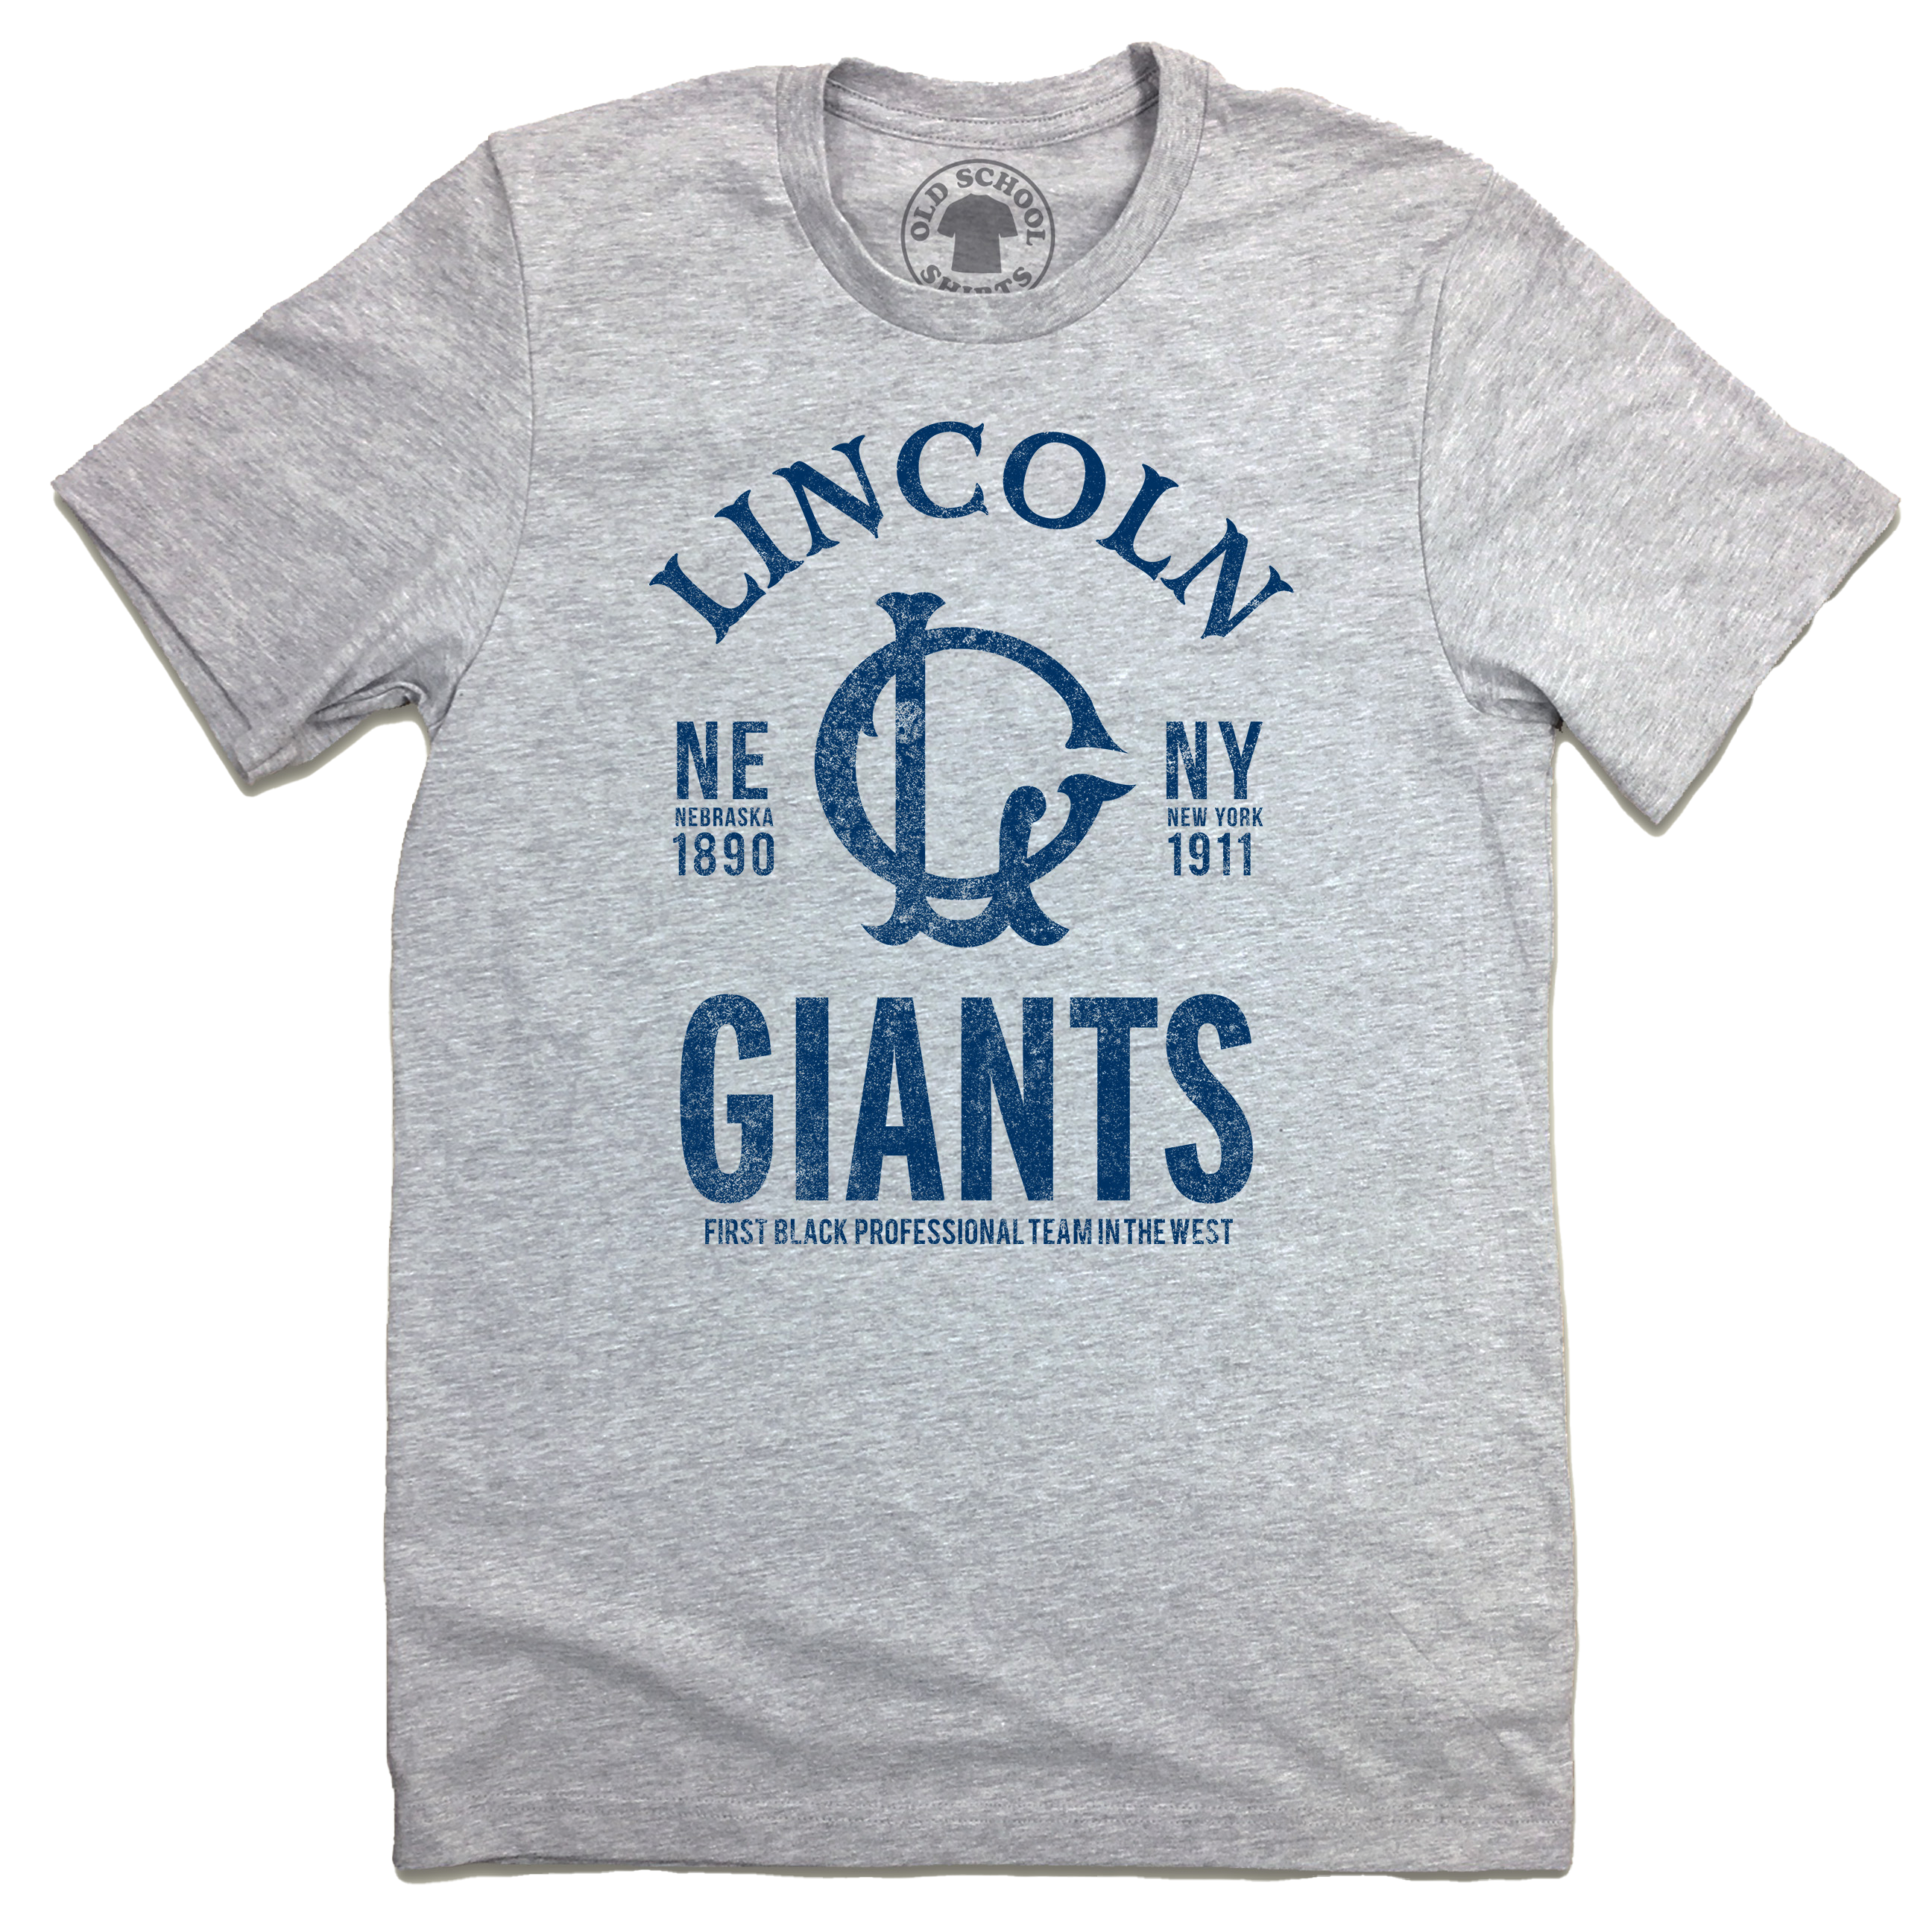 The 1911 New York Giants Baseball Team by International Images